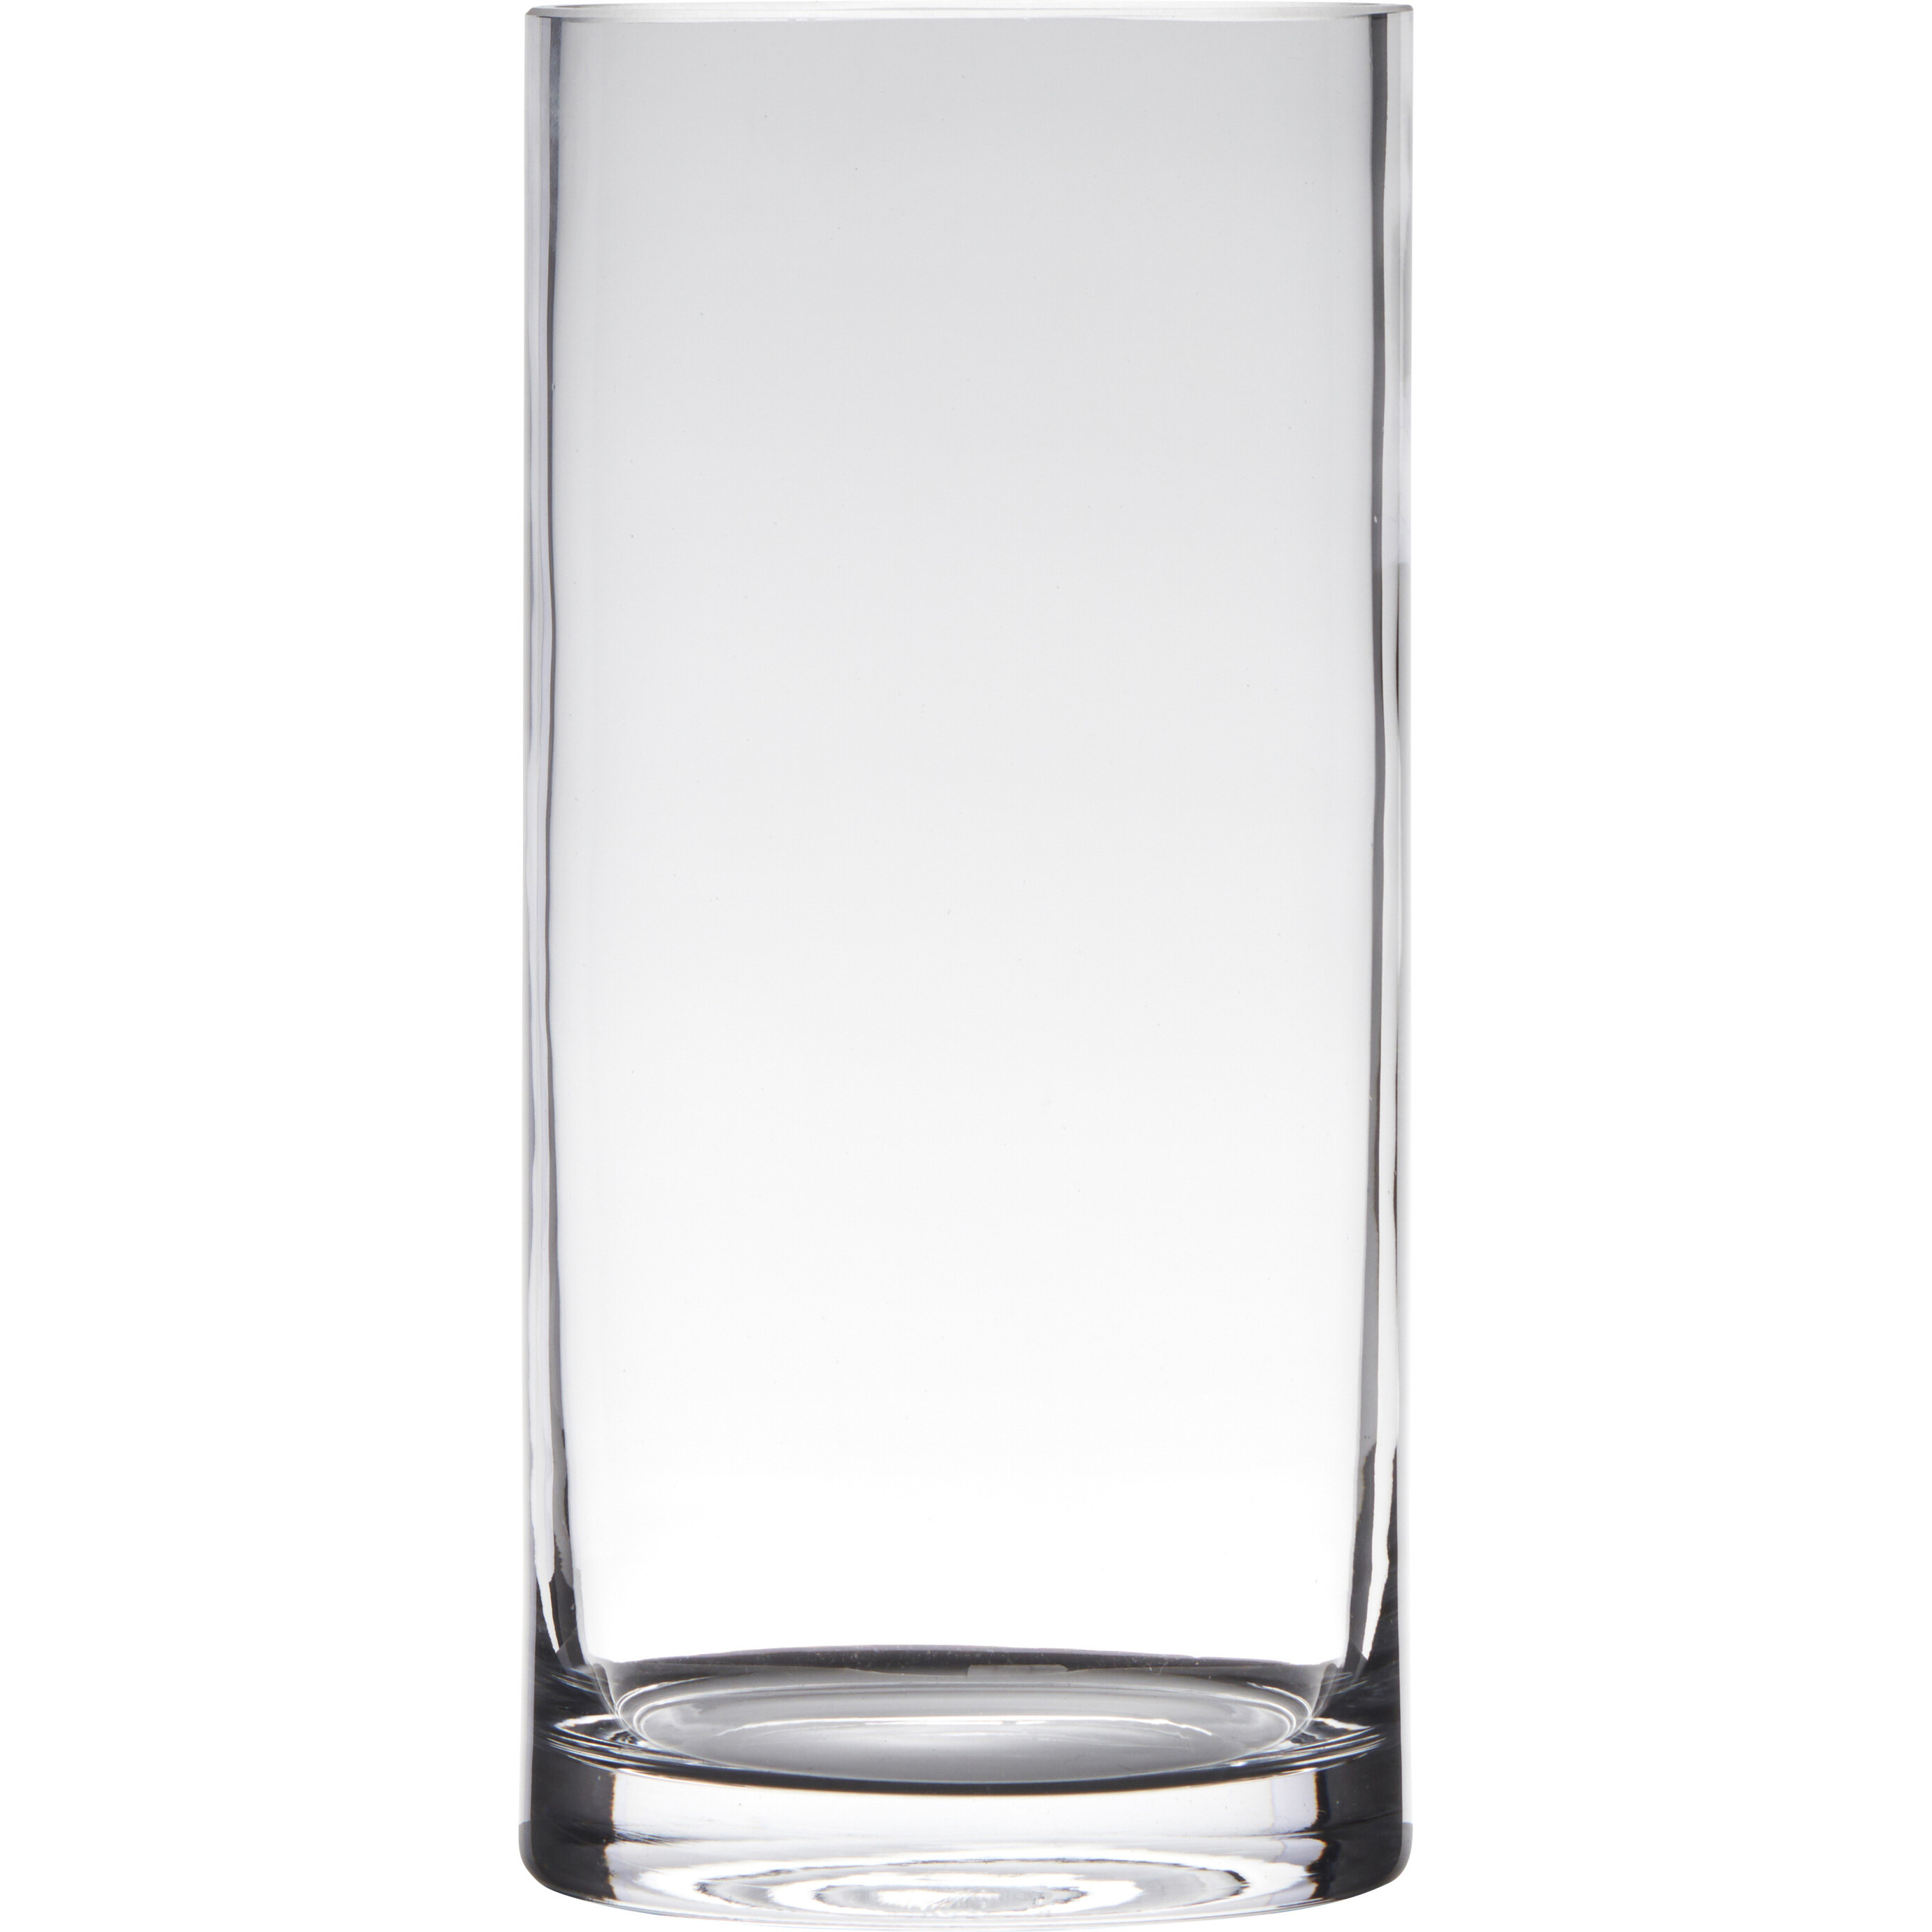 Hakbijl Glass Transparante home-basics cylinder vorm vaas/vazen van glas 25 x 12 cm -